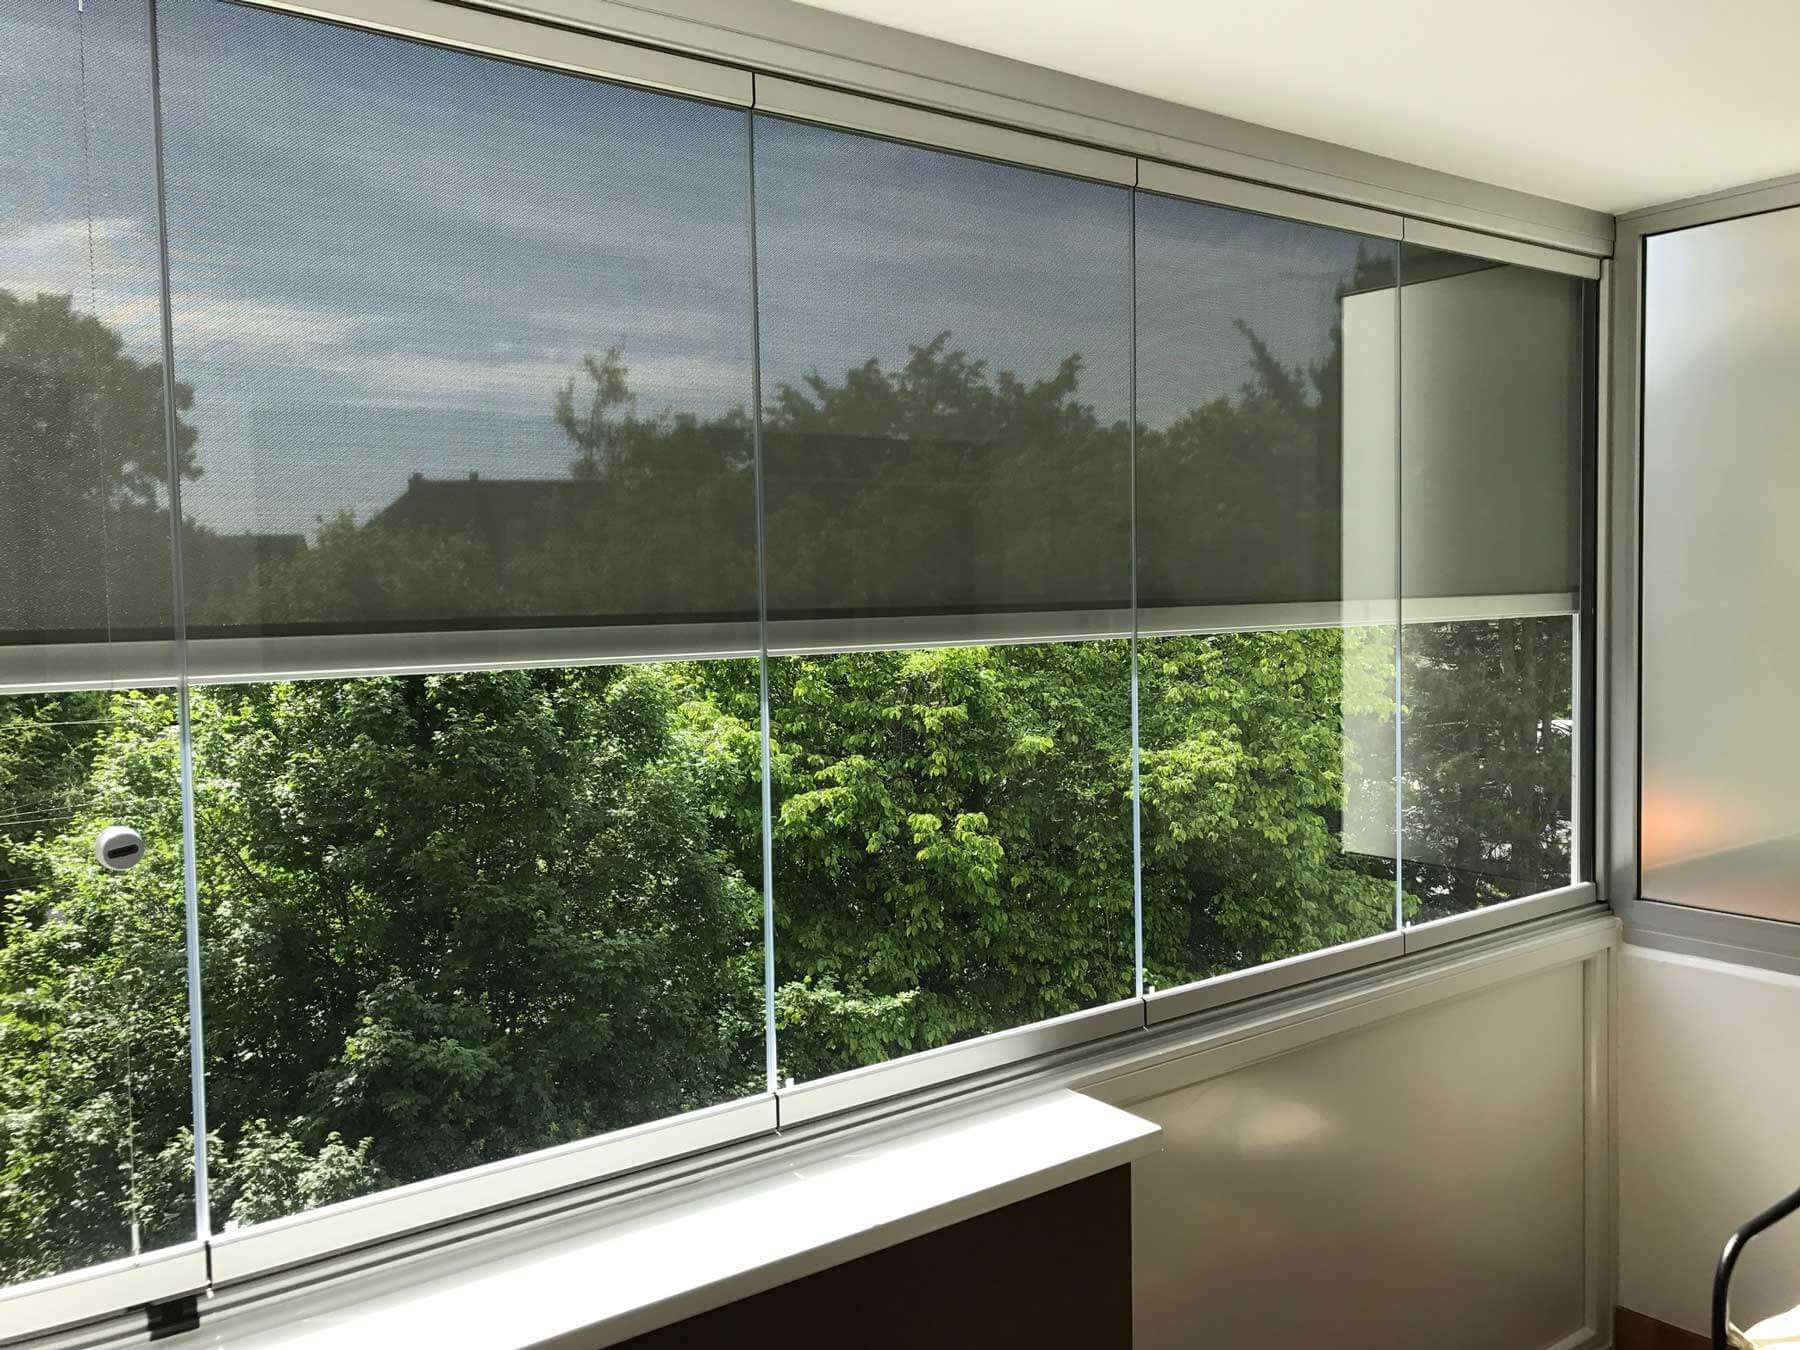 Balkonverbau mit Glas zum Falten - Sunflex SF 25 inkl. Beschattung Fixscreen